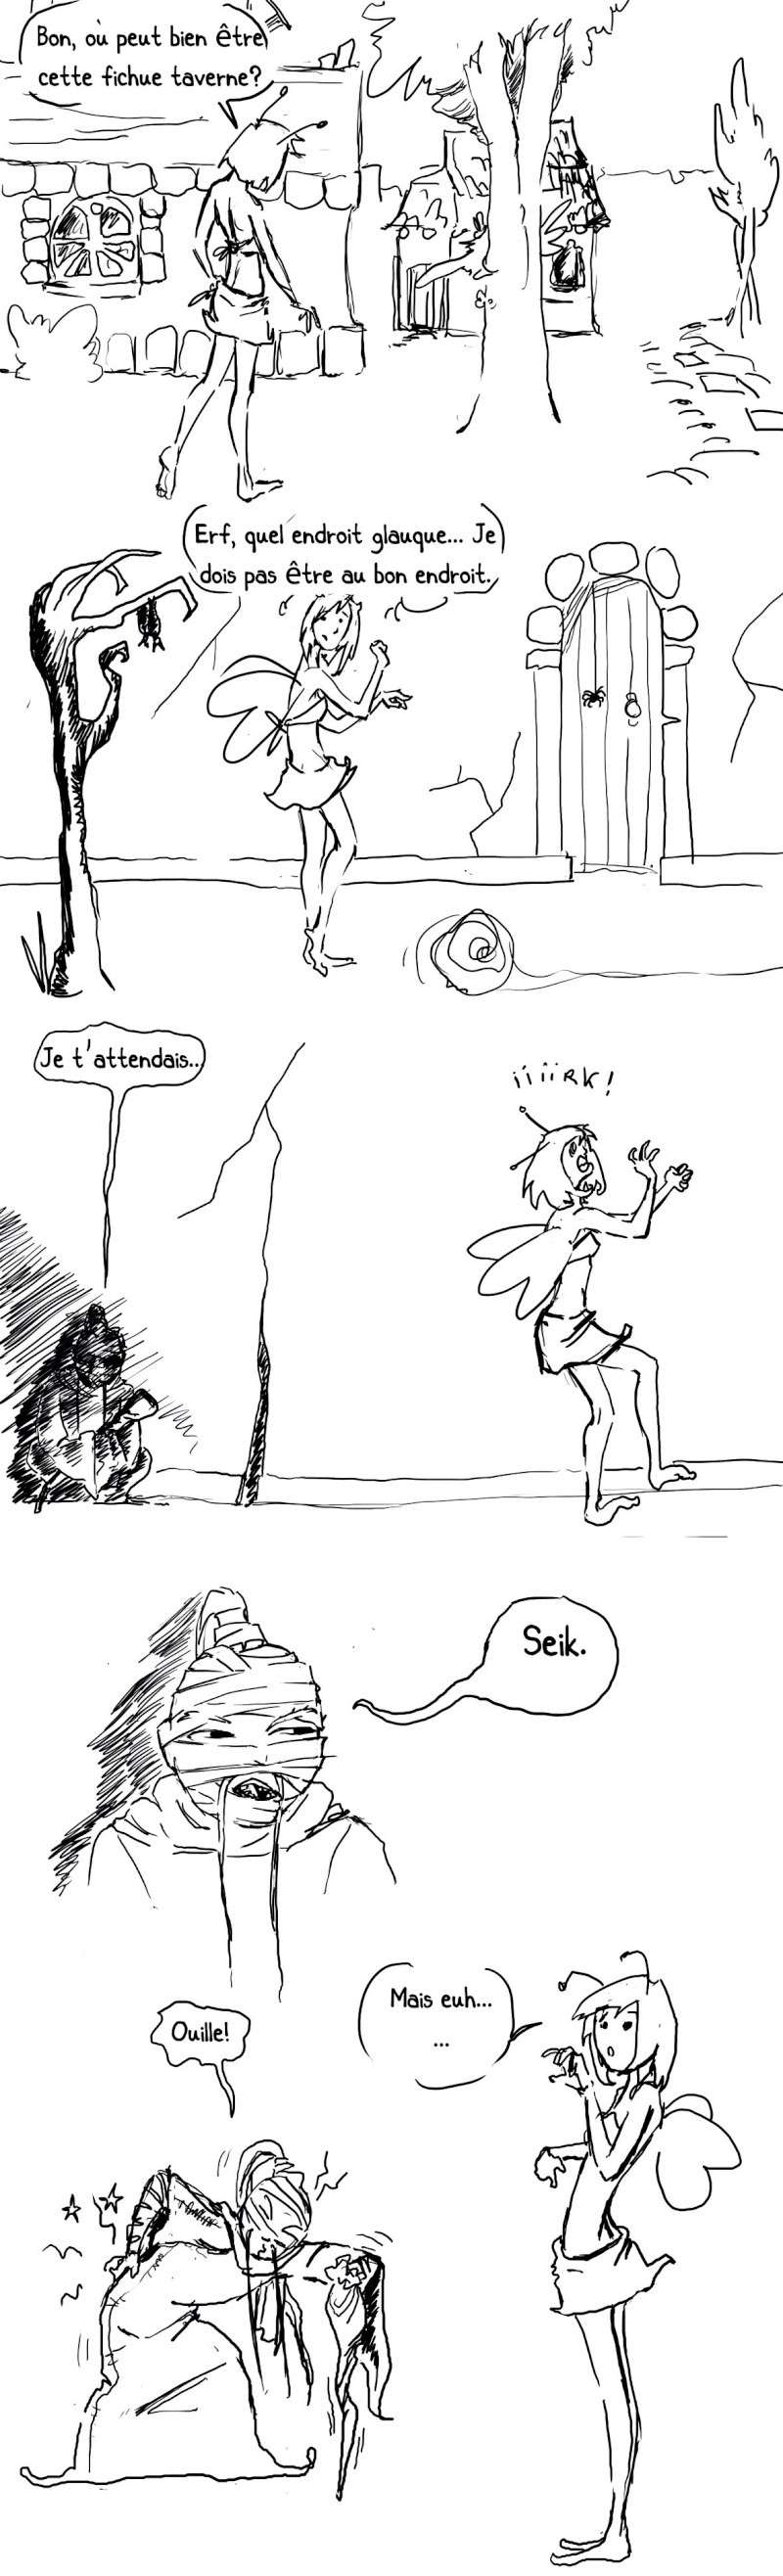 seik et ekis, les aventures ILLUSTREES - Page 4 Strip113